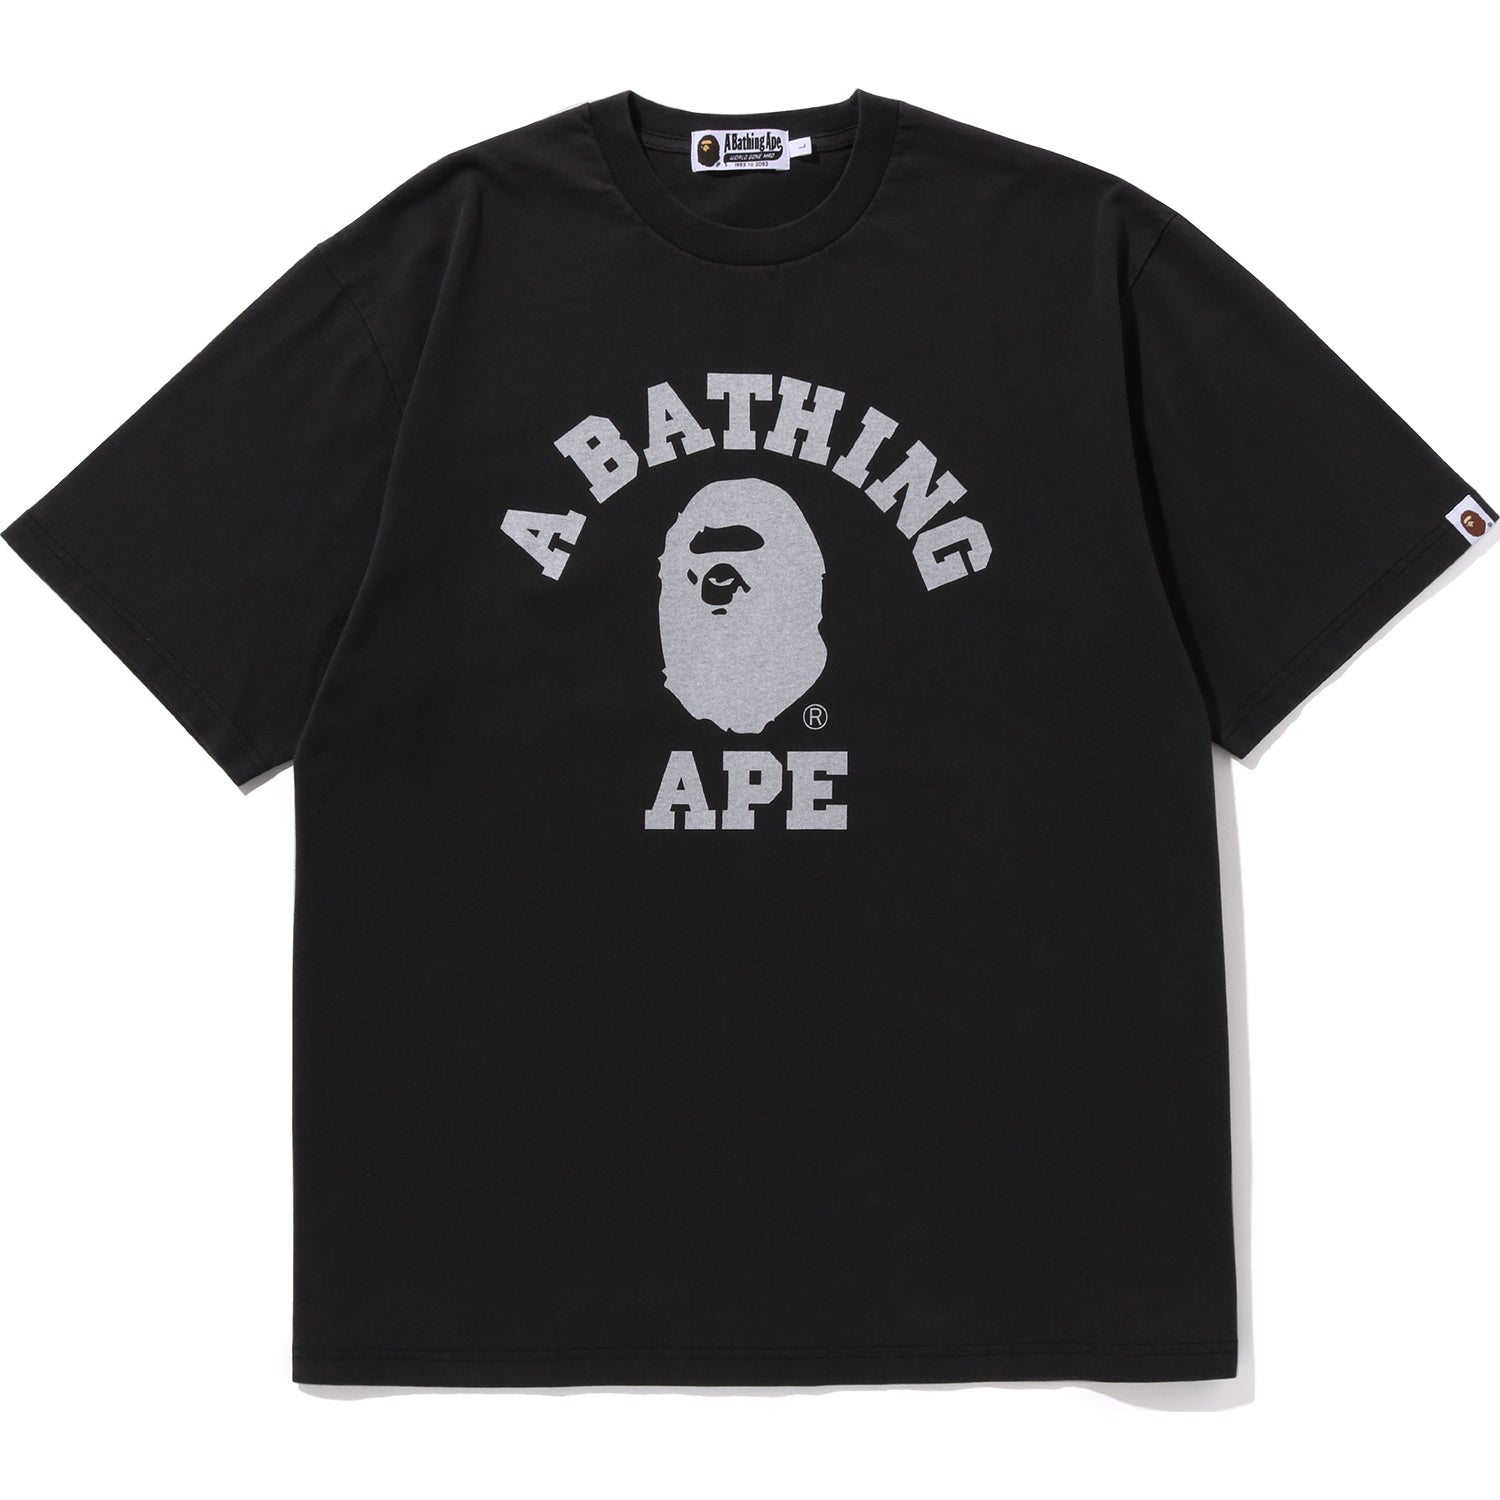 A BATHING APE® – us.bape.com